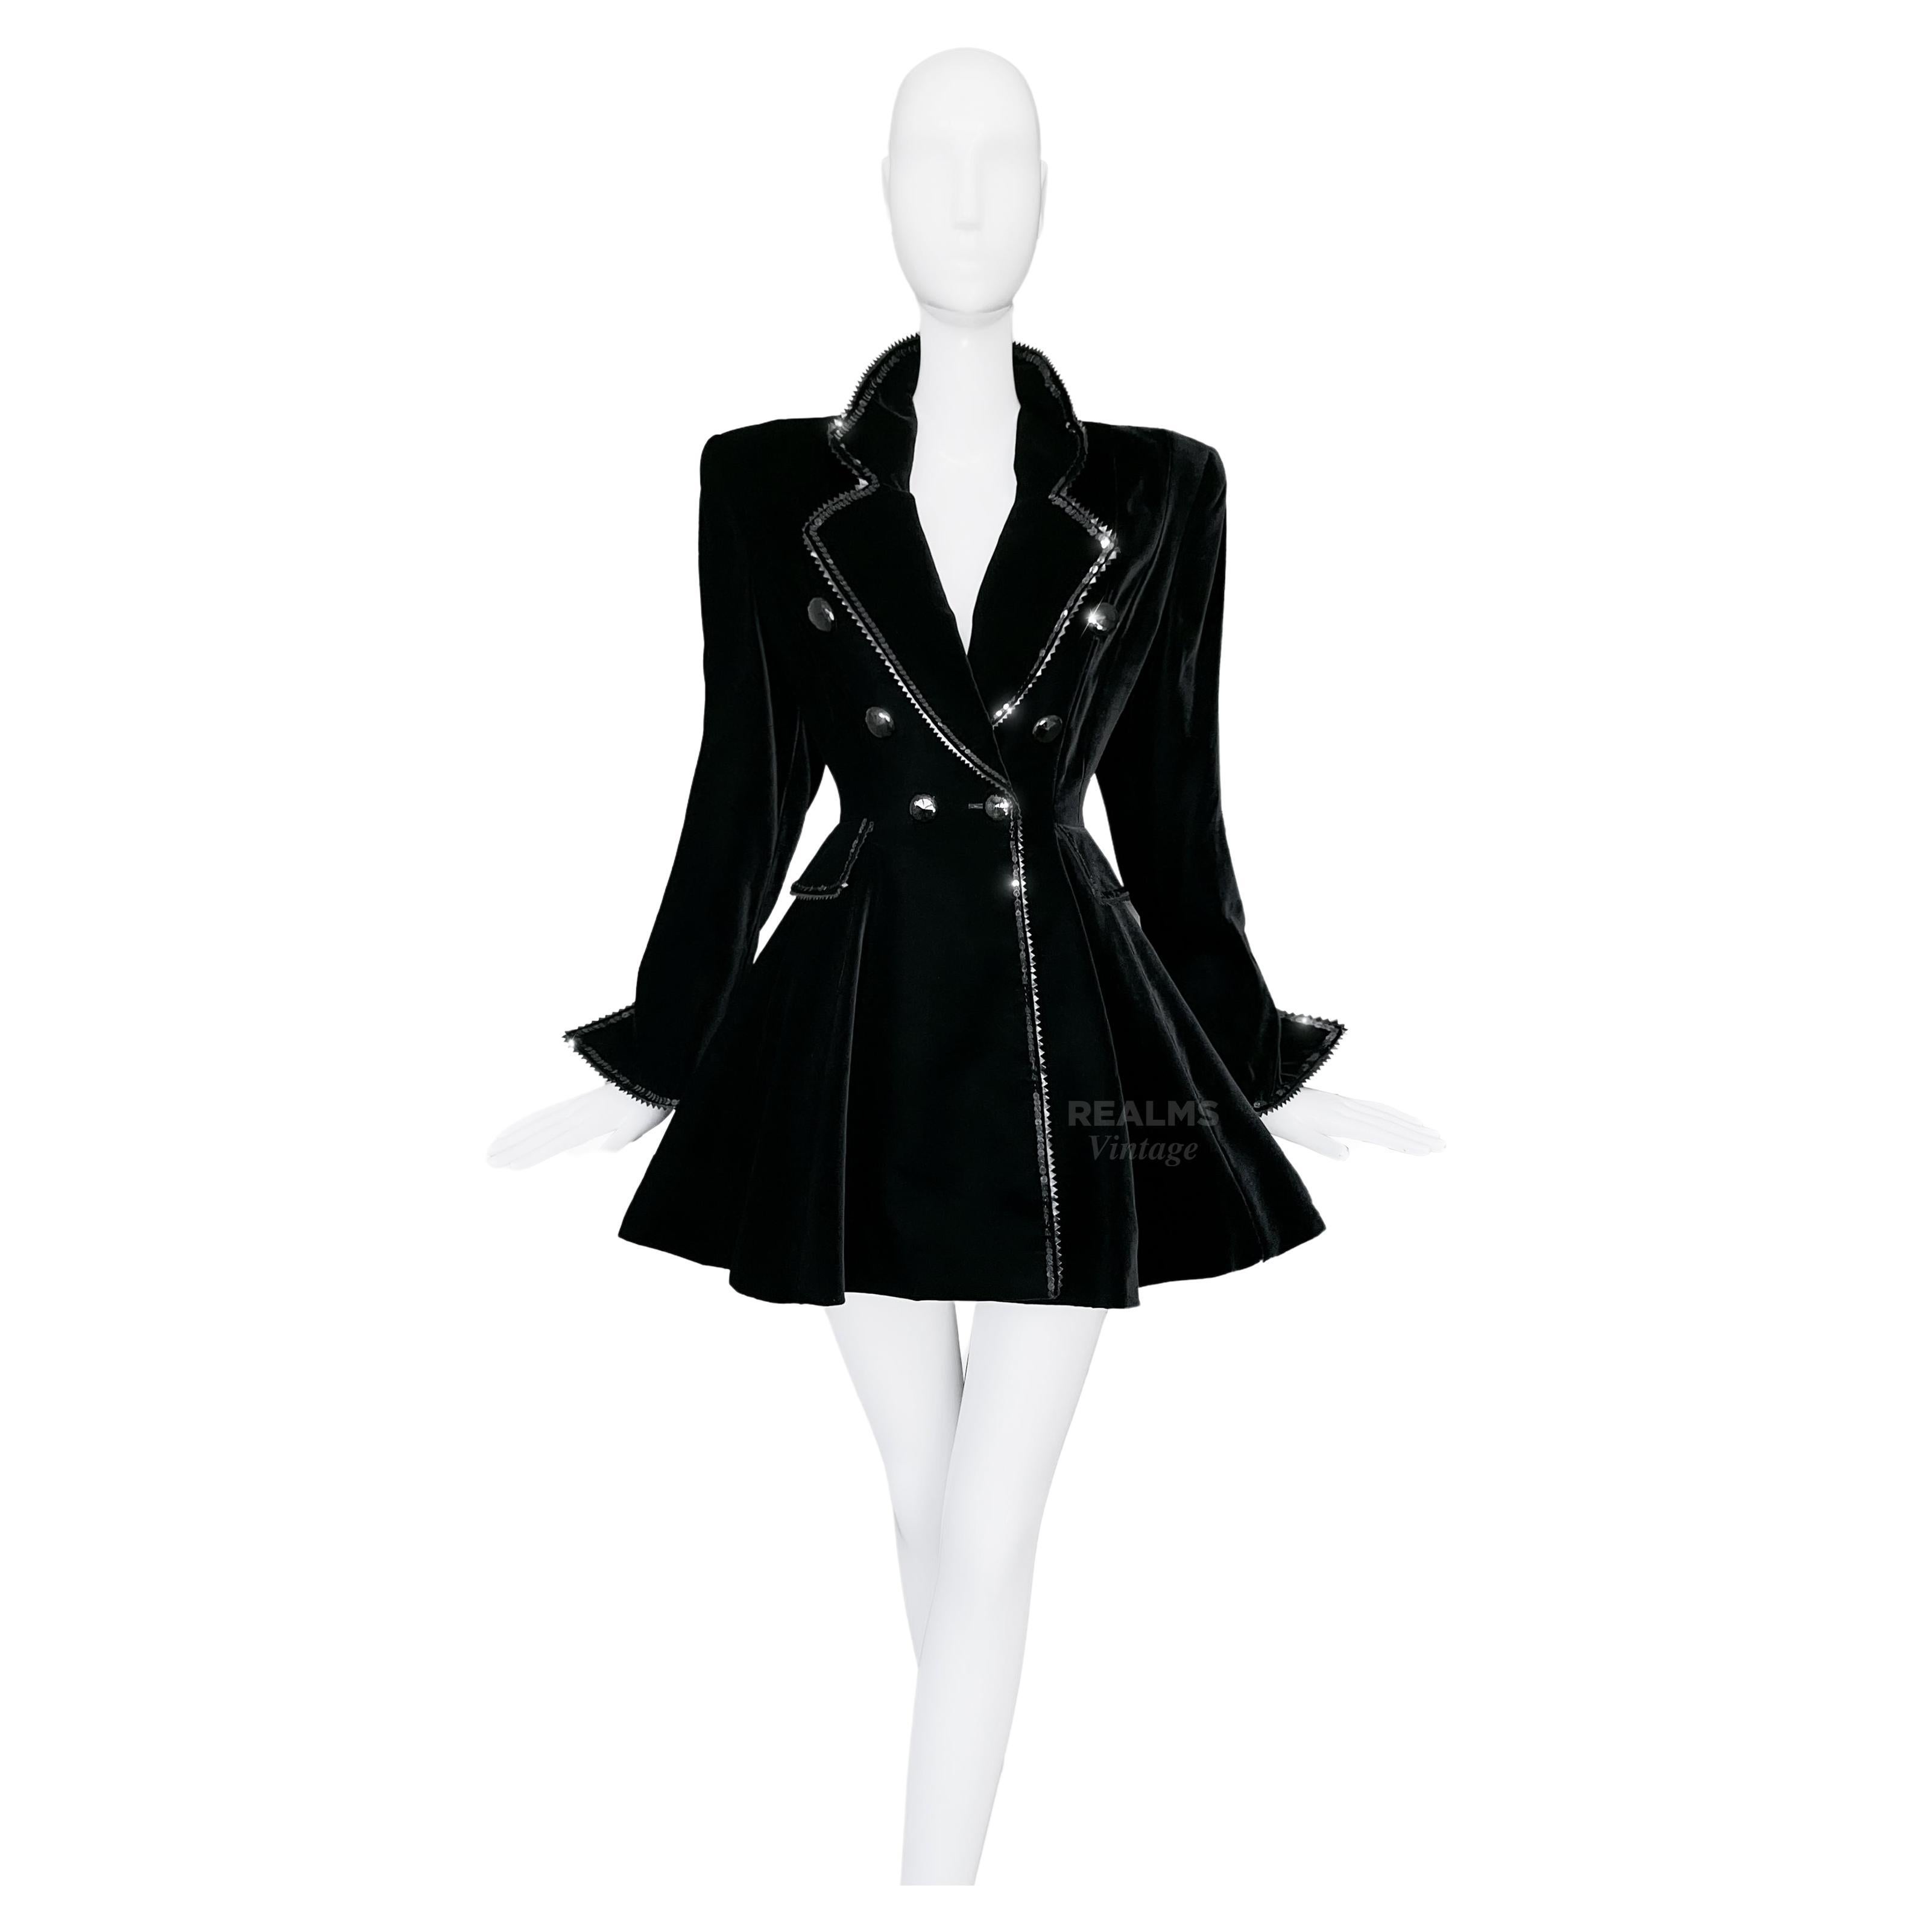 Christian Dior by Gianfranco Ferré FW 1994 Black Velvet Jacket For Sale